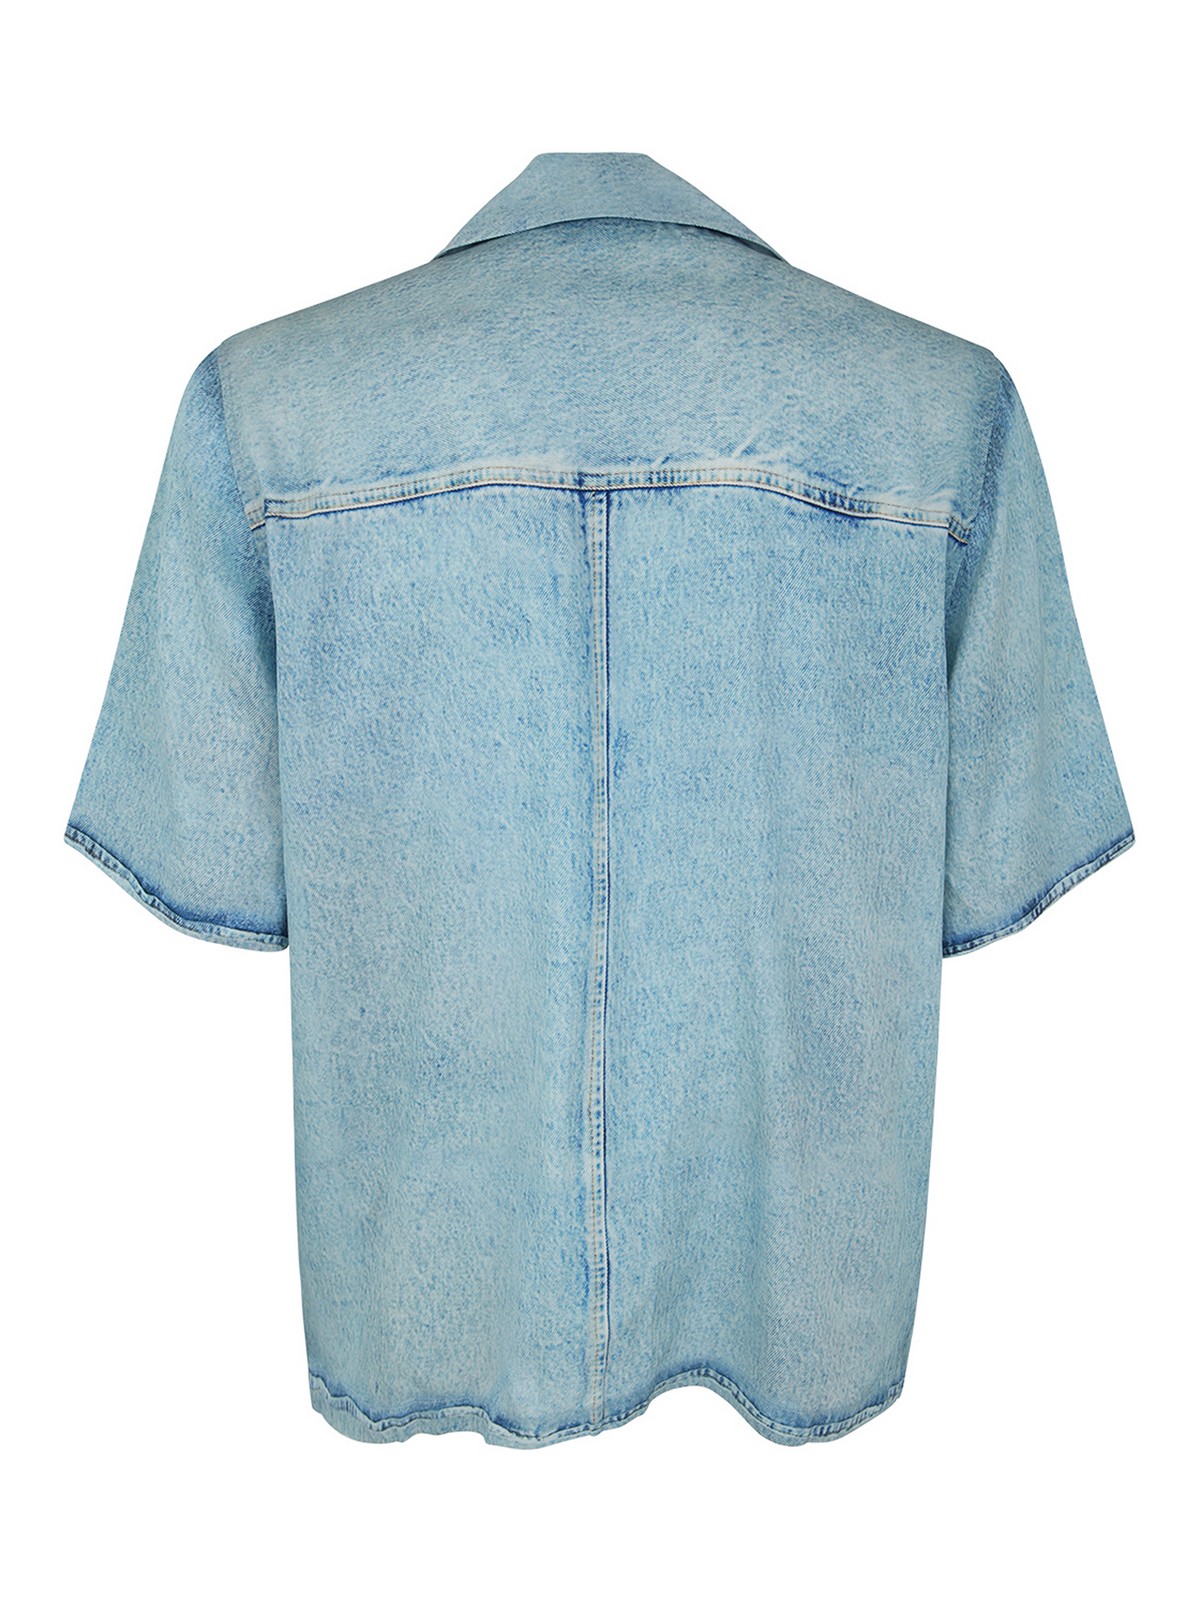 Inwoner genetisch sjaal Shirts Diesel - Short sleeves denim shirt - A085380DMAH01 | iKRIX.com